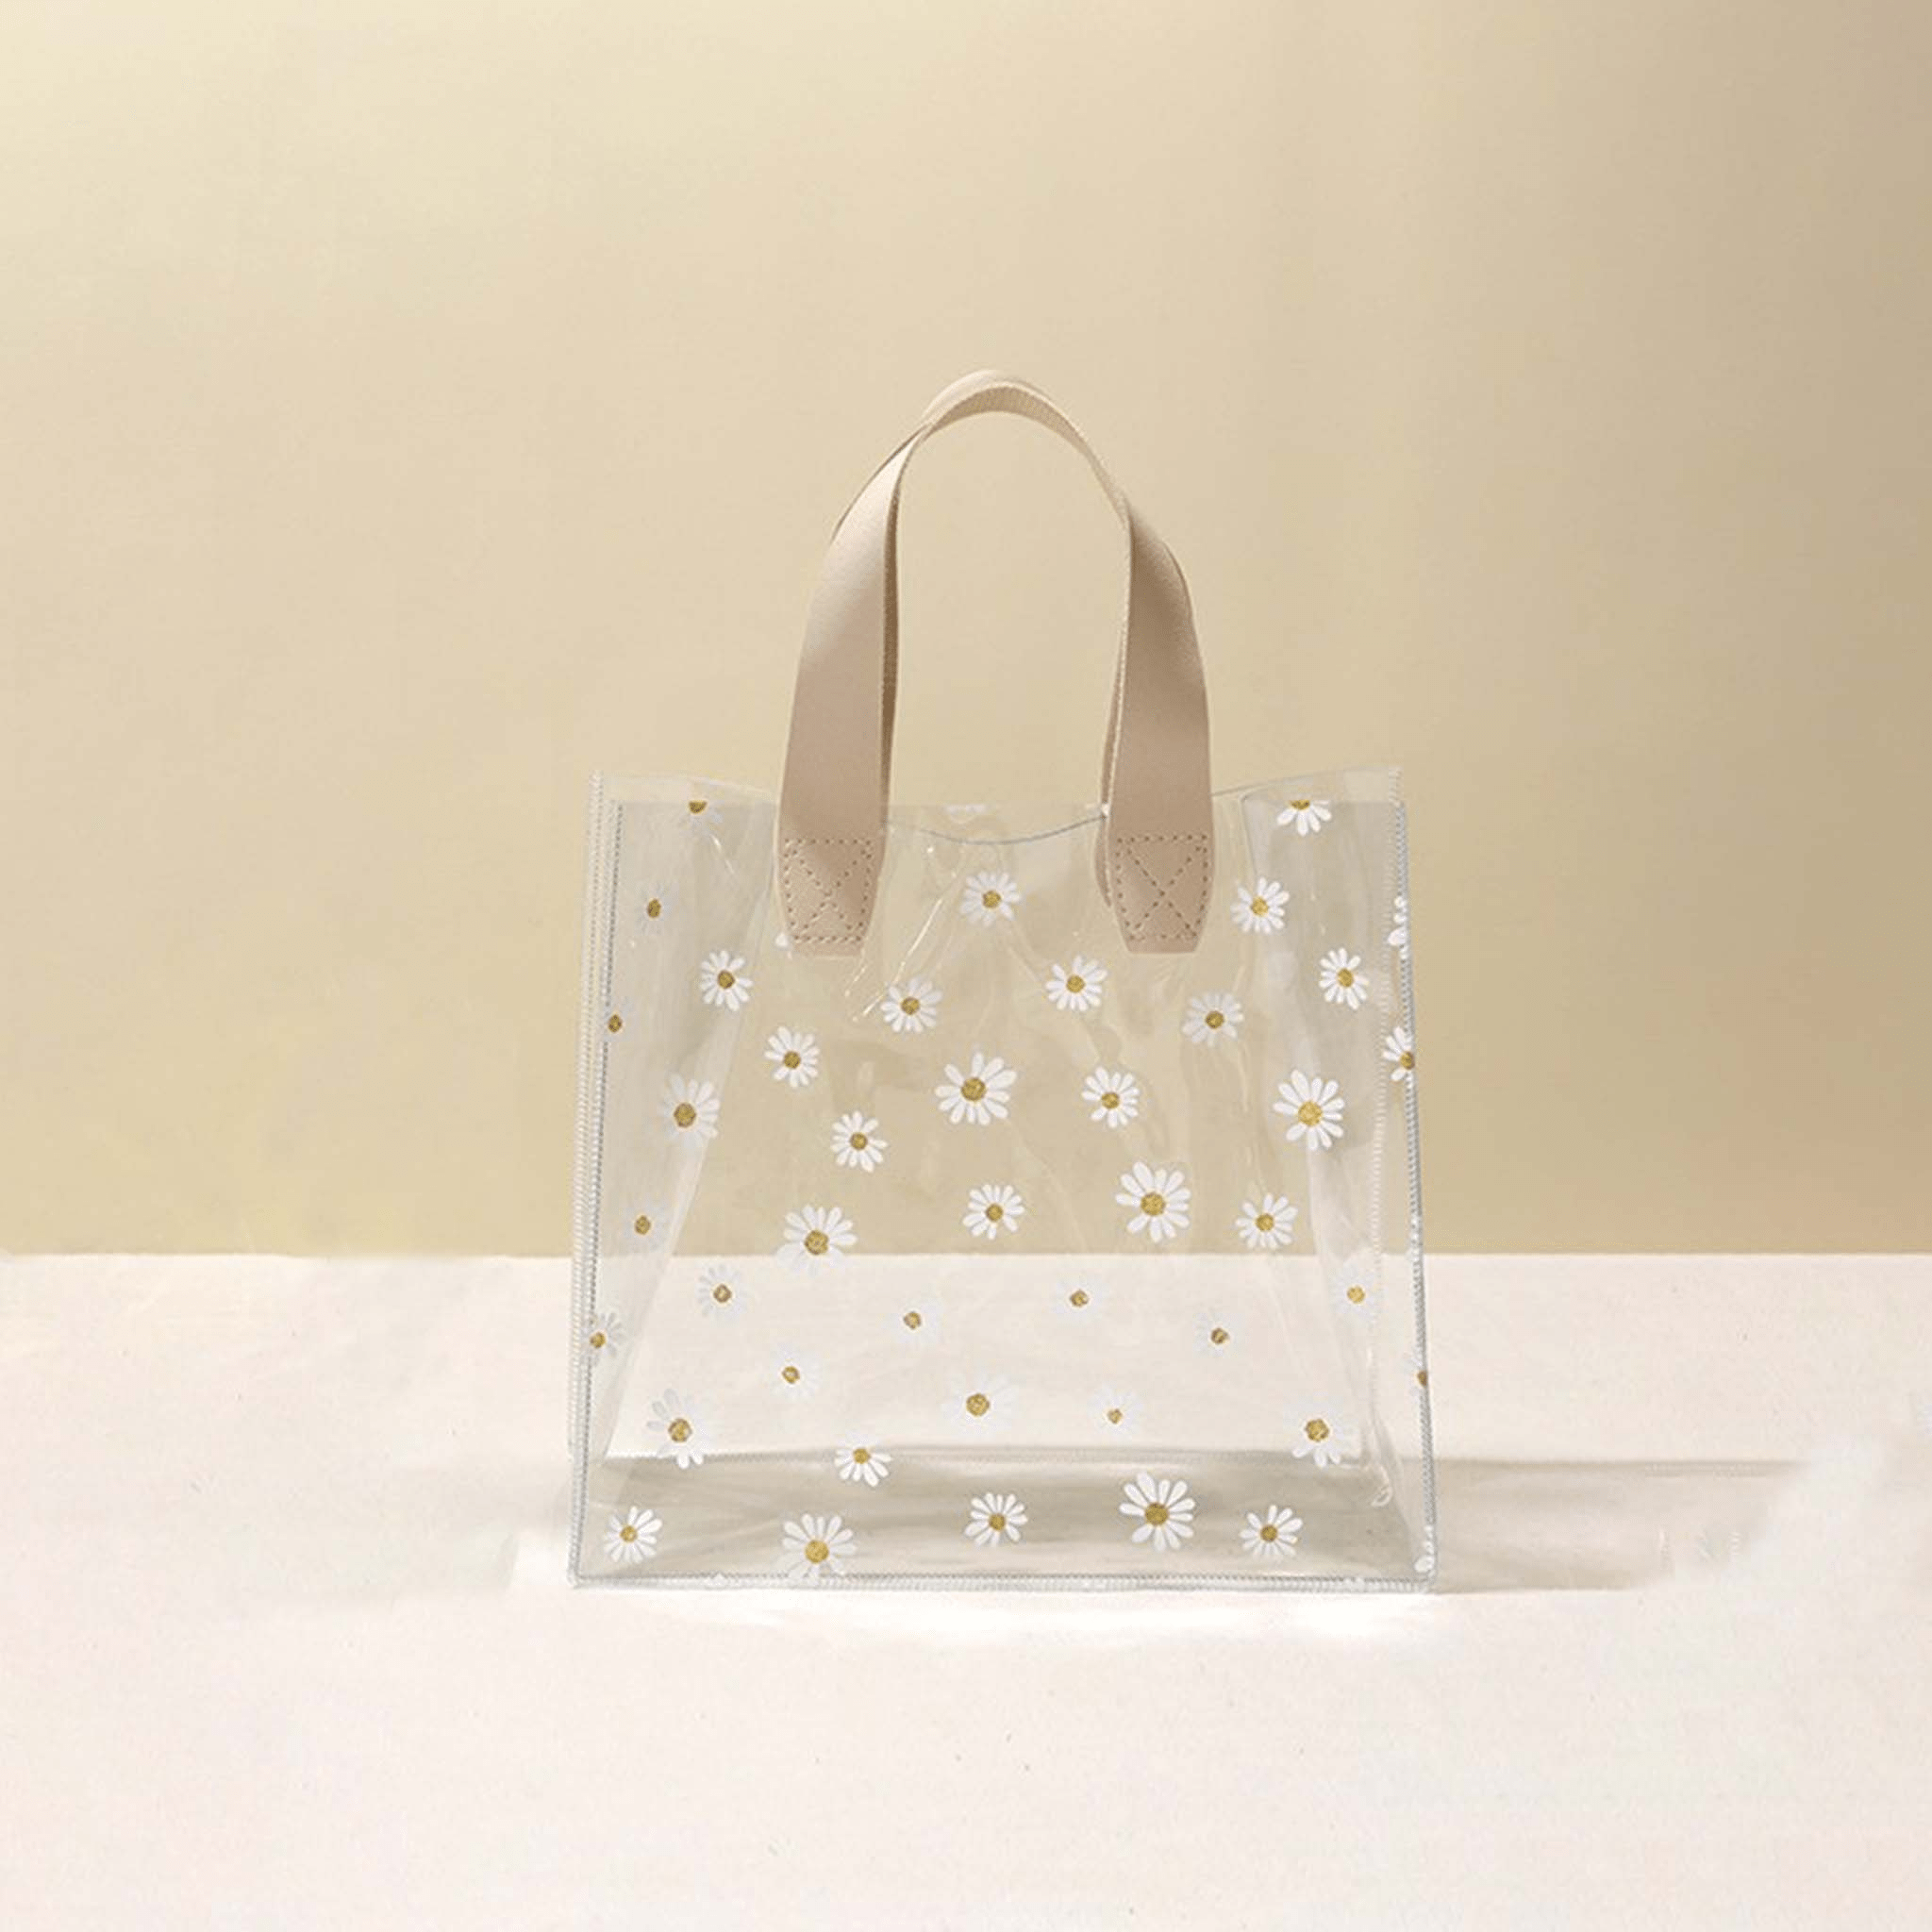  Abaodam 24pcs Transparent Tote Bag Clear Plastic Gift